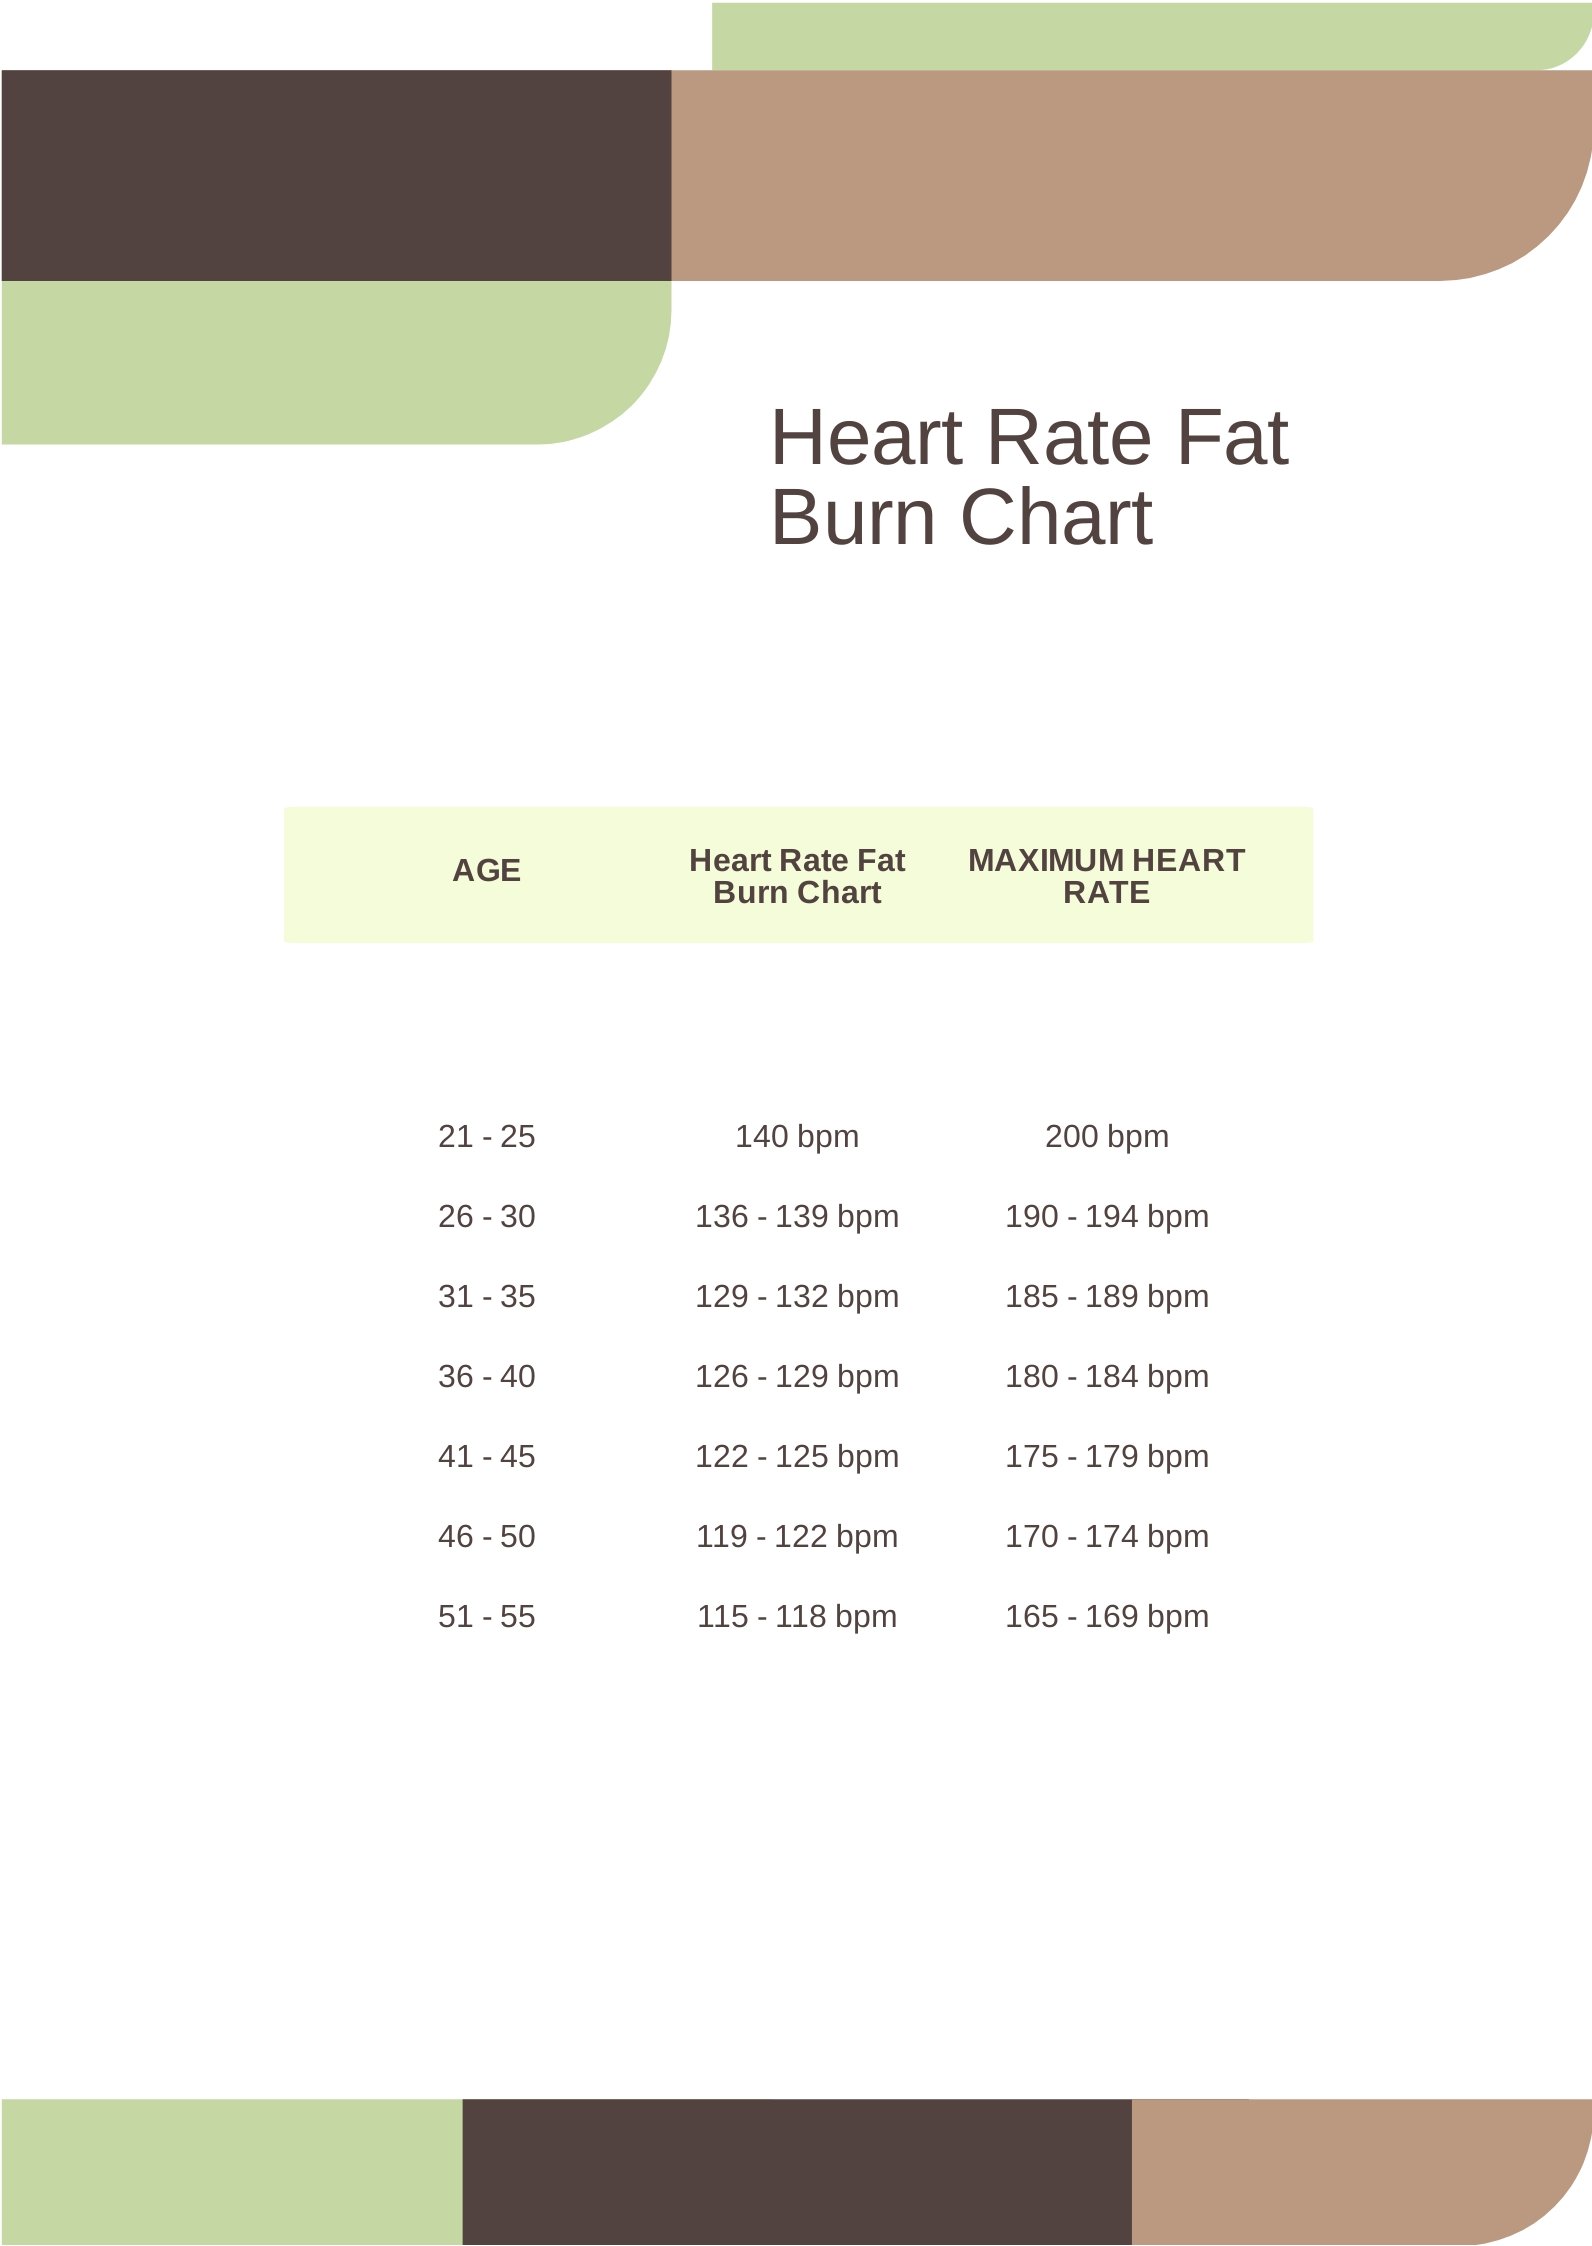 Heart Rate Fat Burn Chart in PDF